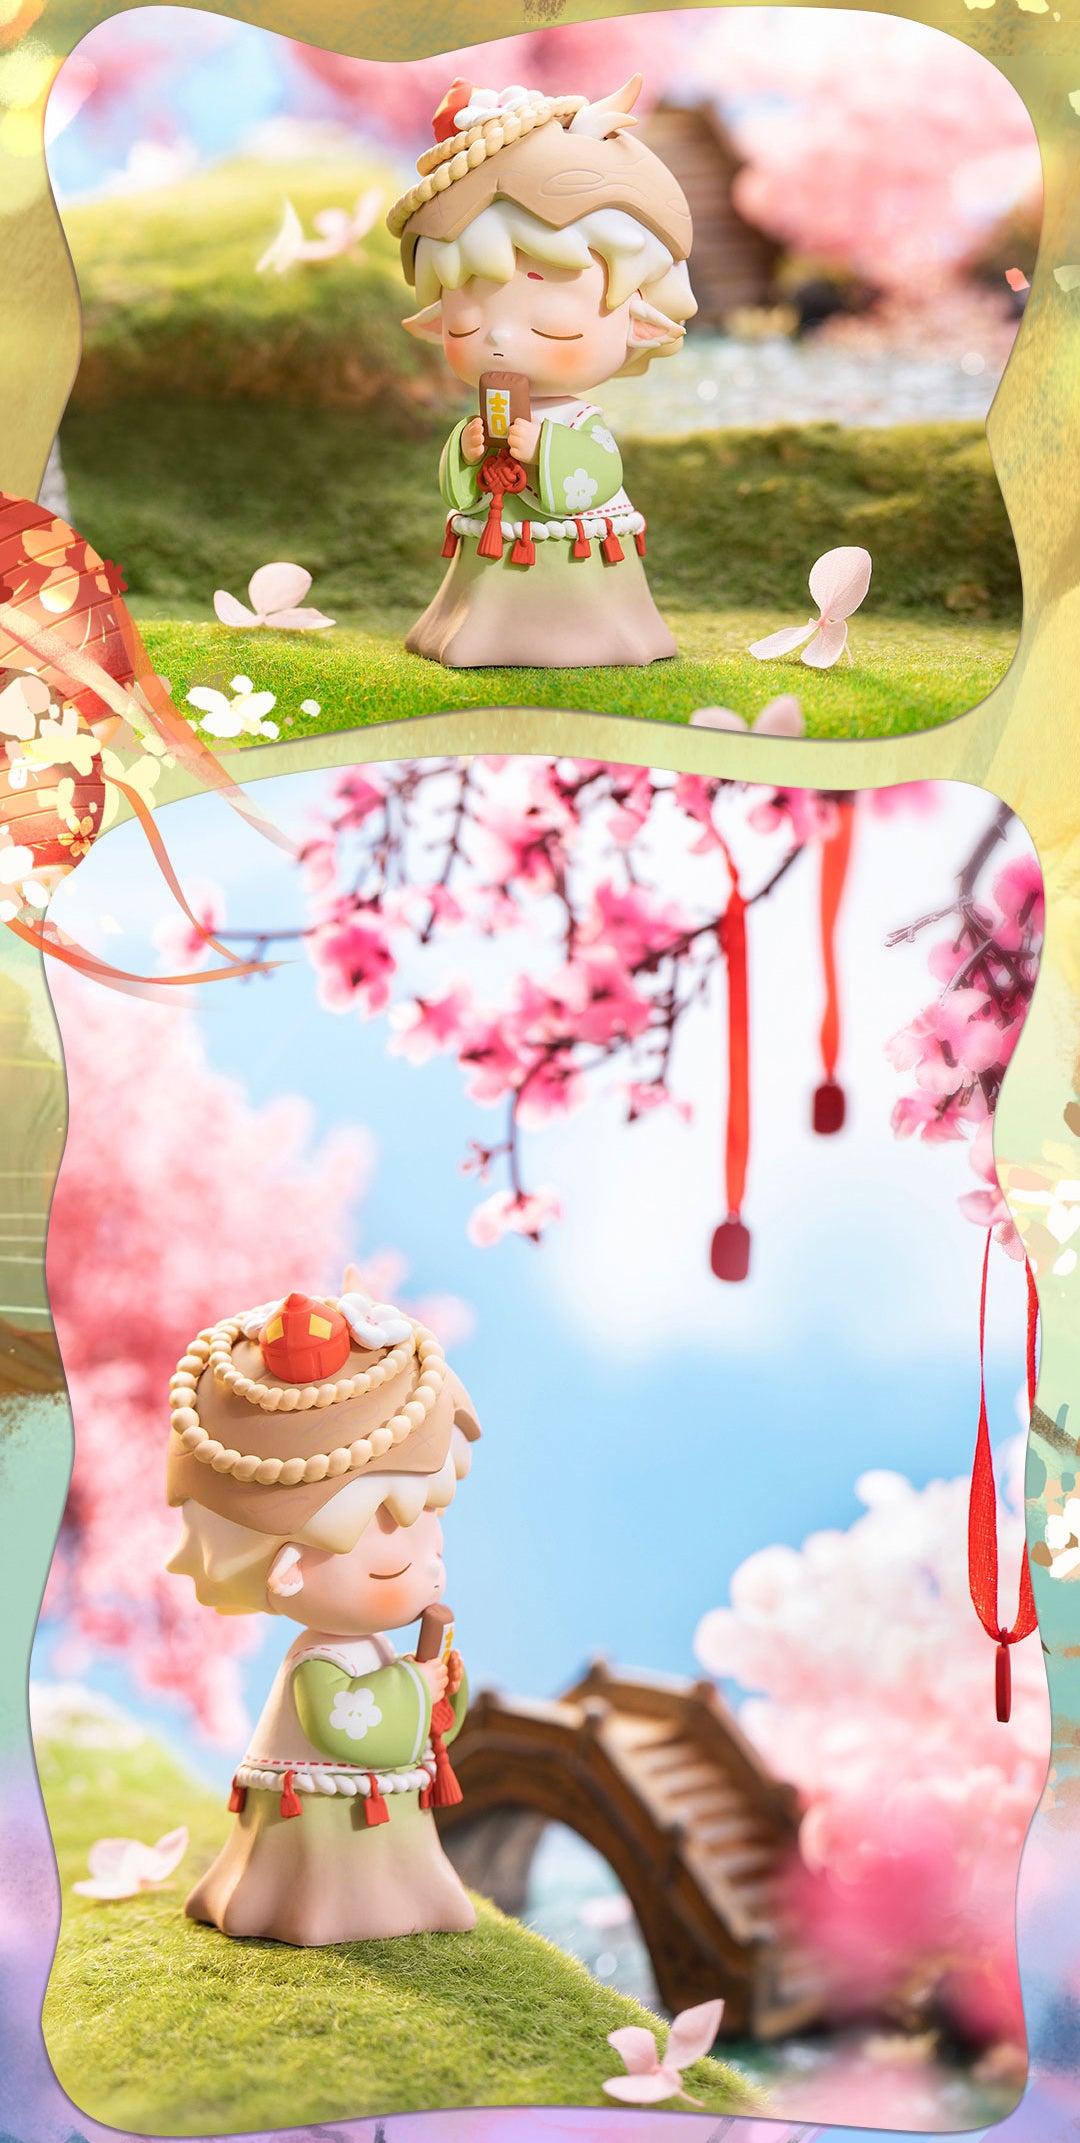 [Heyone] MIMI - Peach Blossoms Chinese Ancientry Series Blind Box